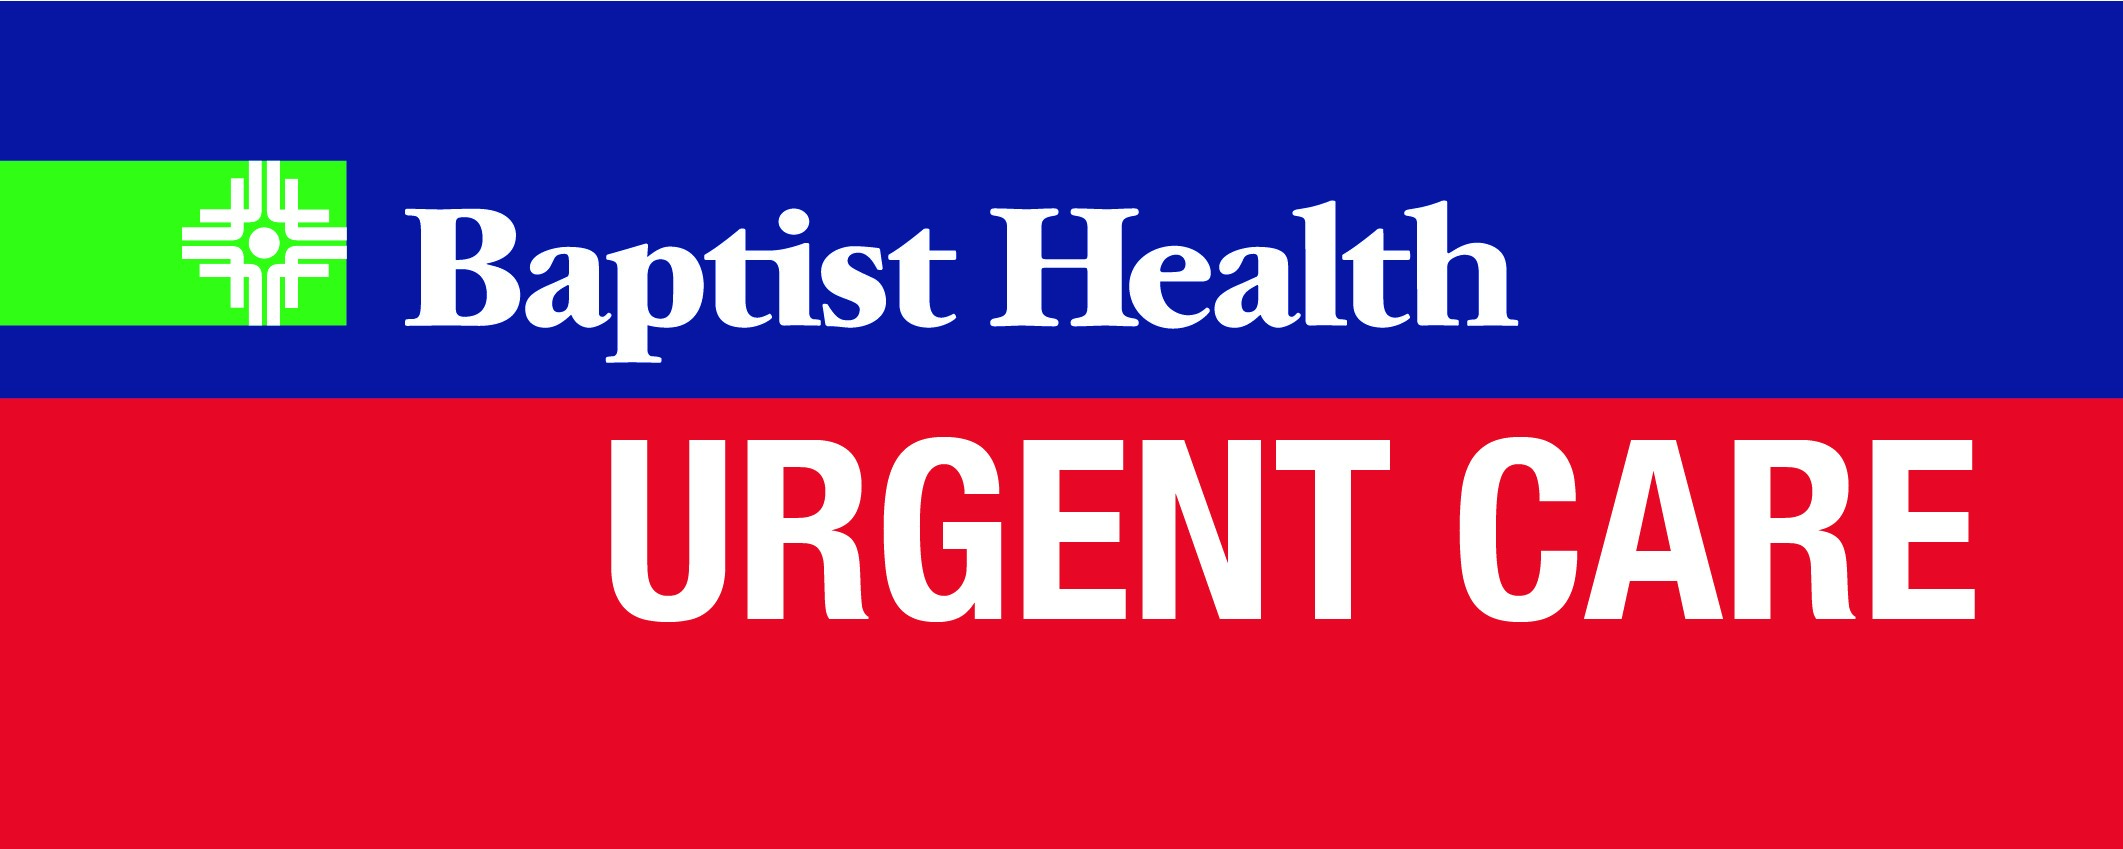 Baptist Health Urgent Care - Fort Smith Logo